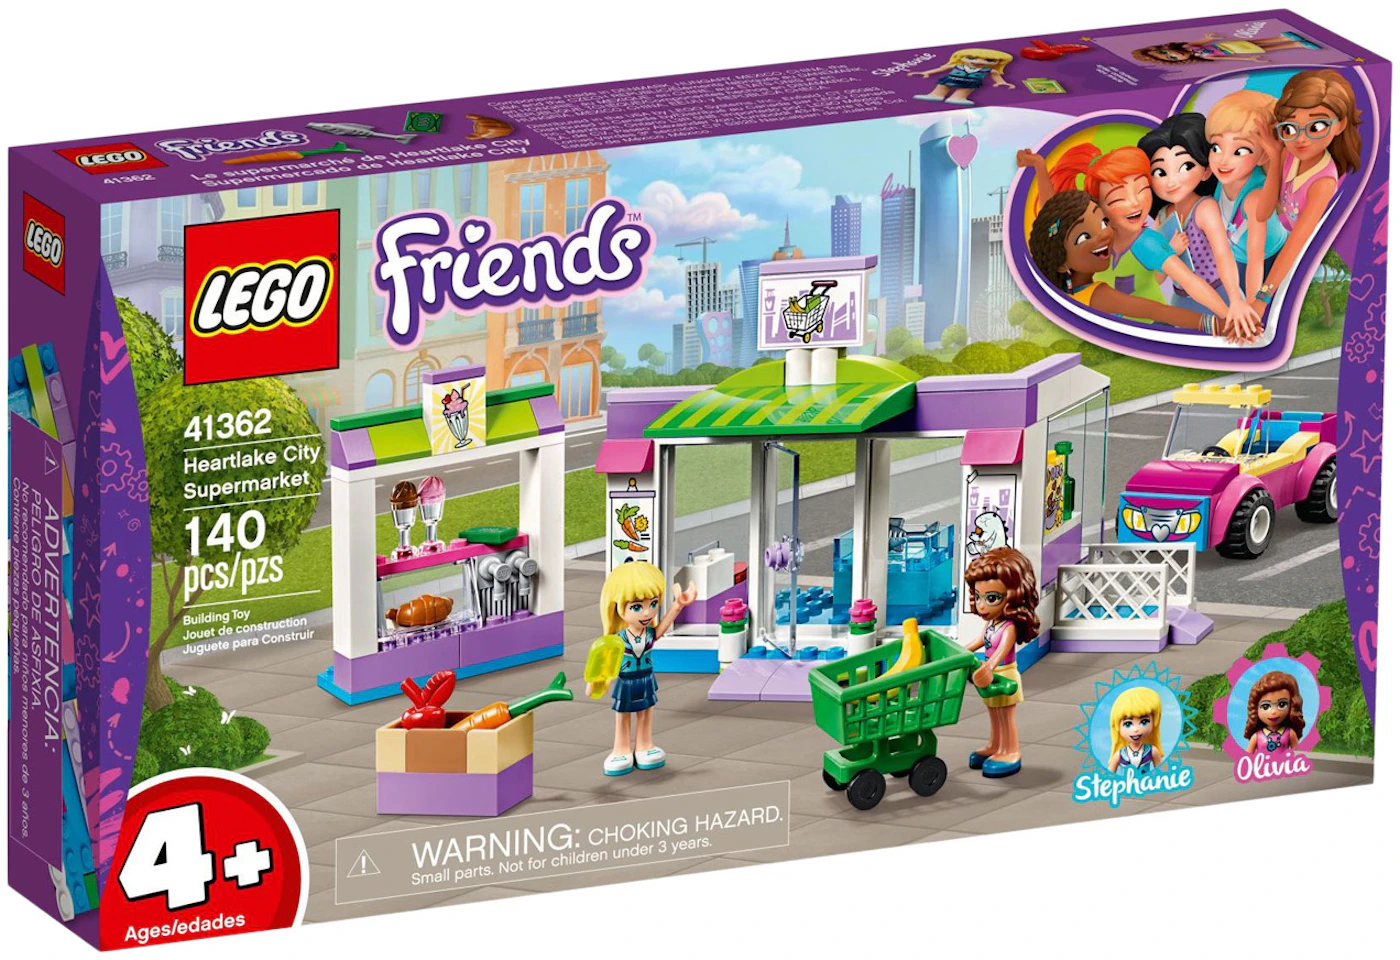 LEGO Friends Heartlake City Supermarket Set 41362 - US